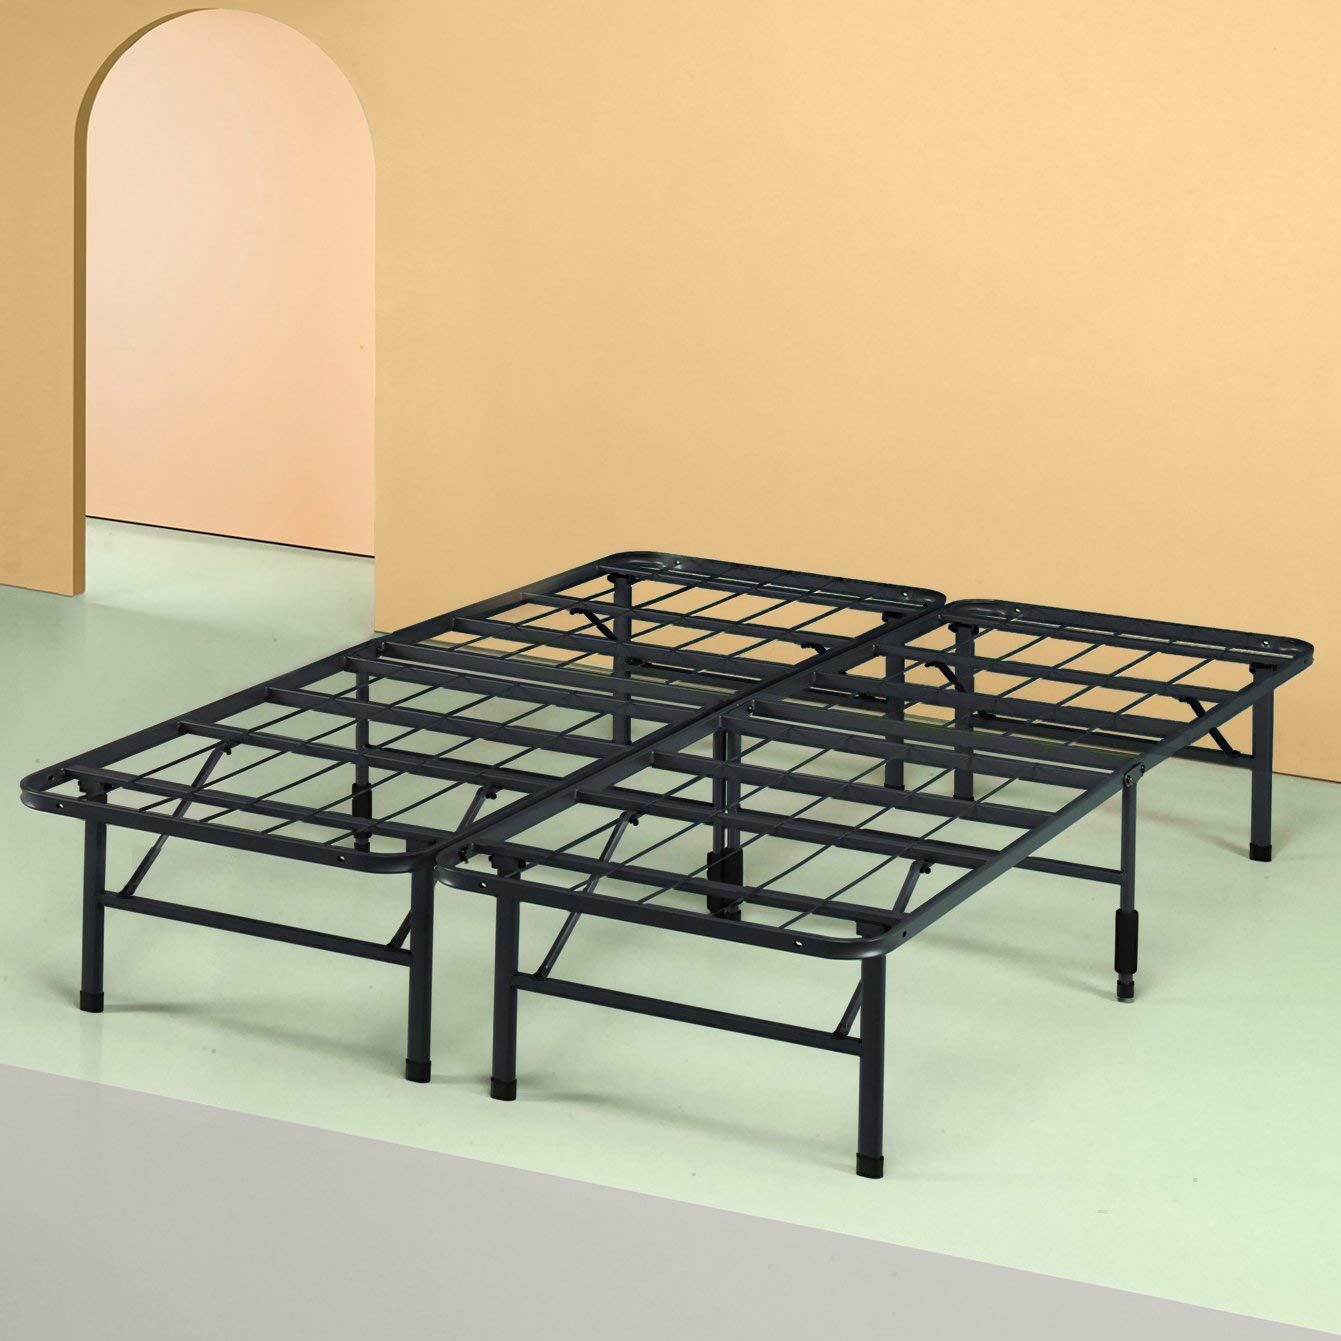 Foldable Queen-size bed frame (og. Price: $95)